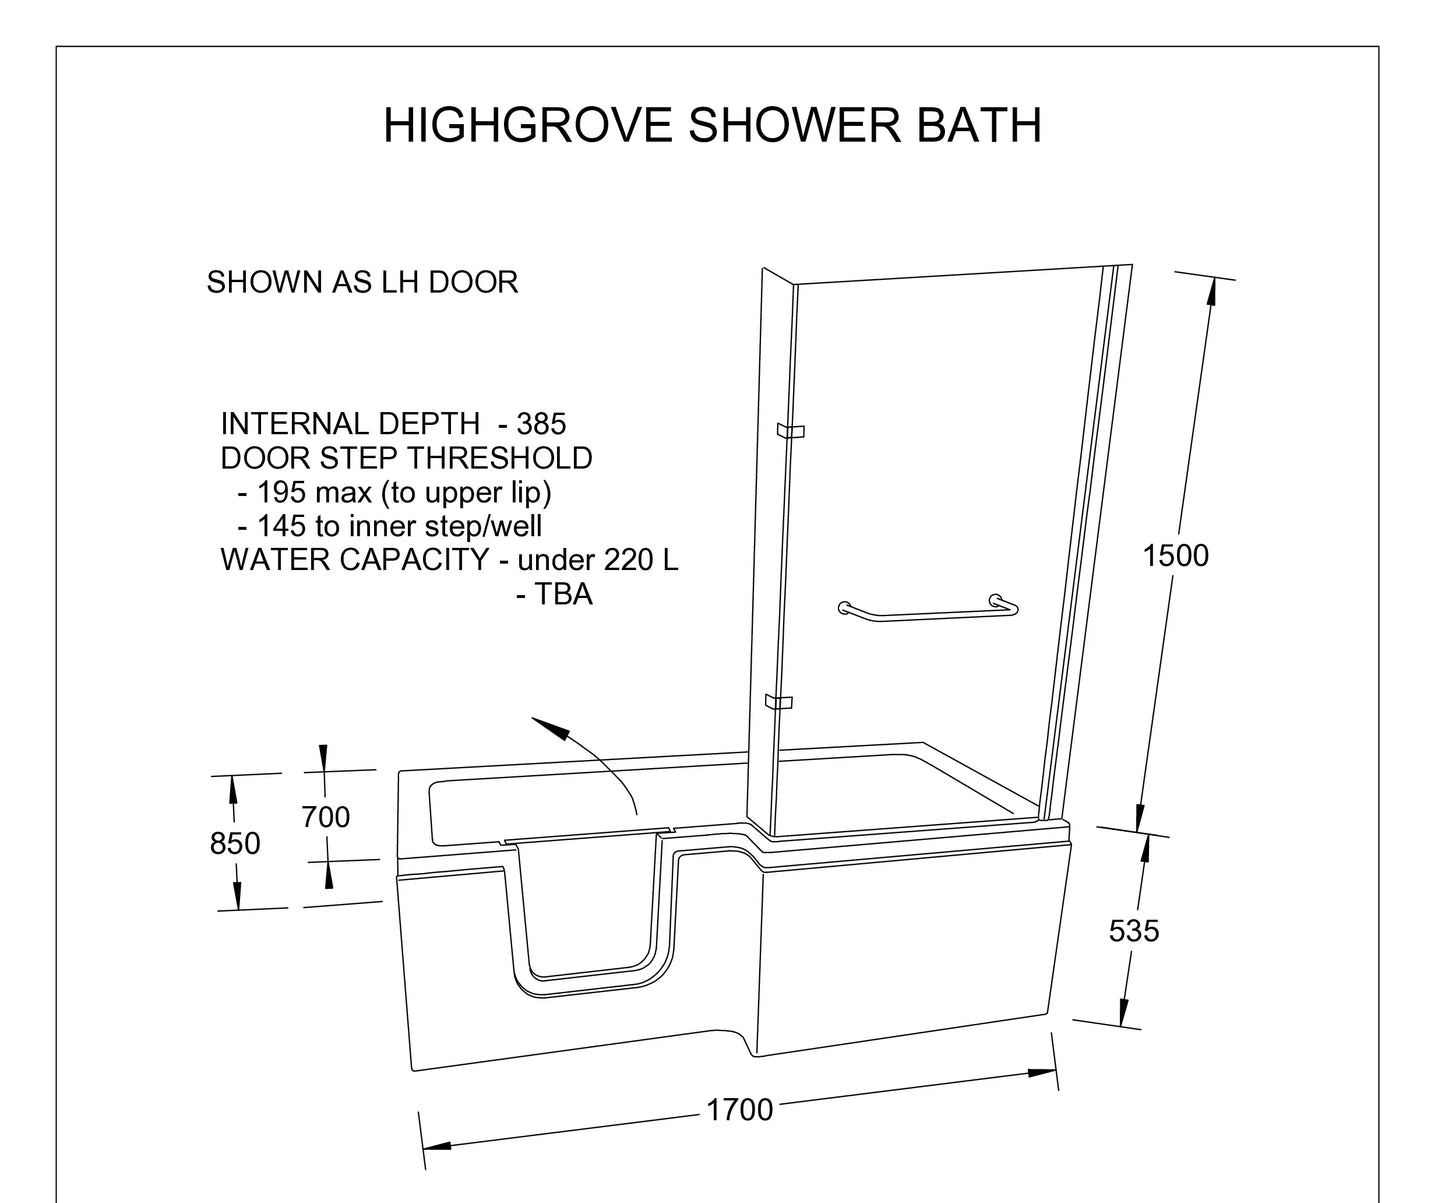 High Grove Shower Bath